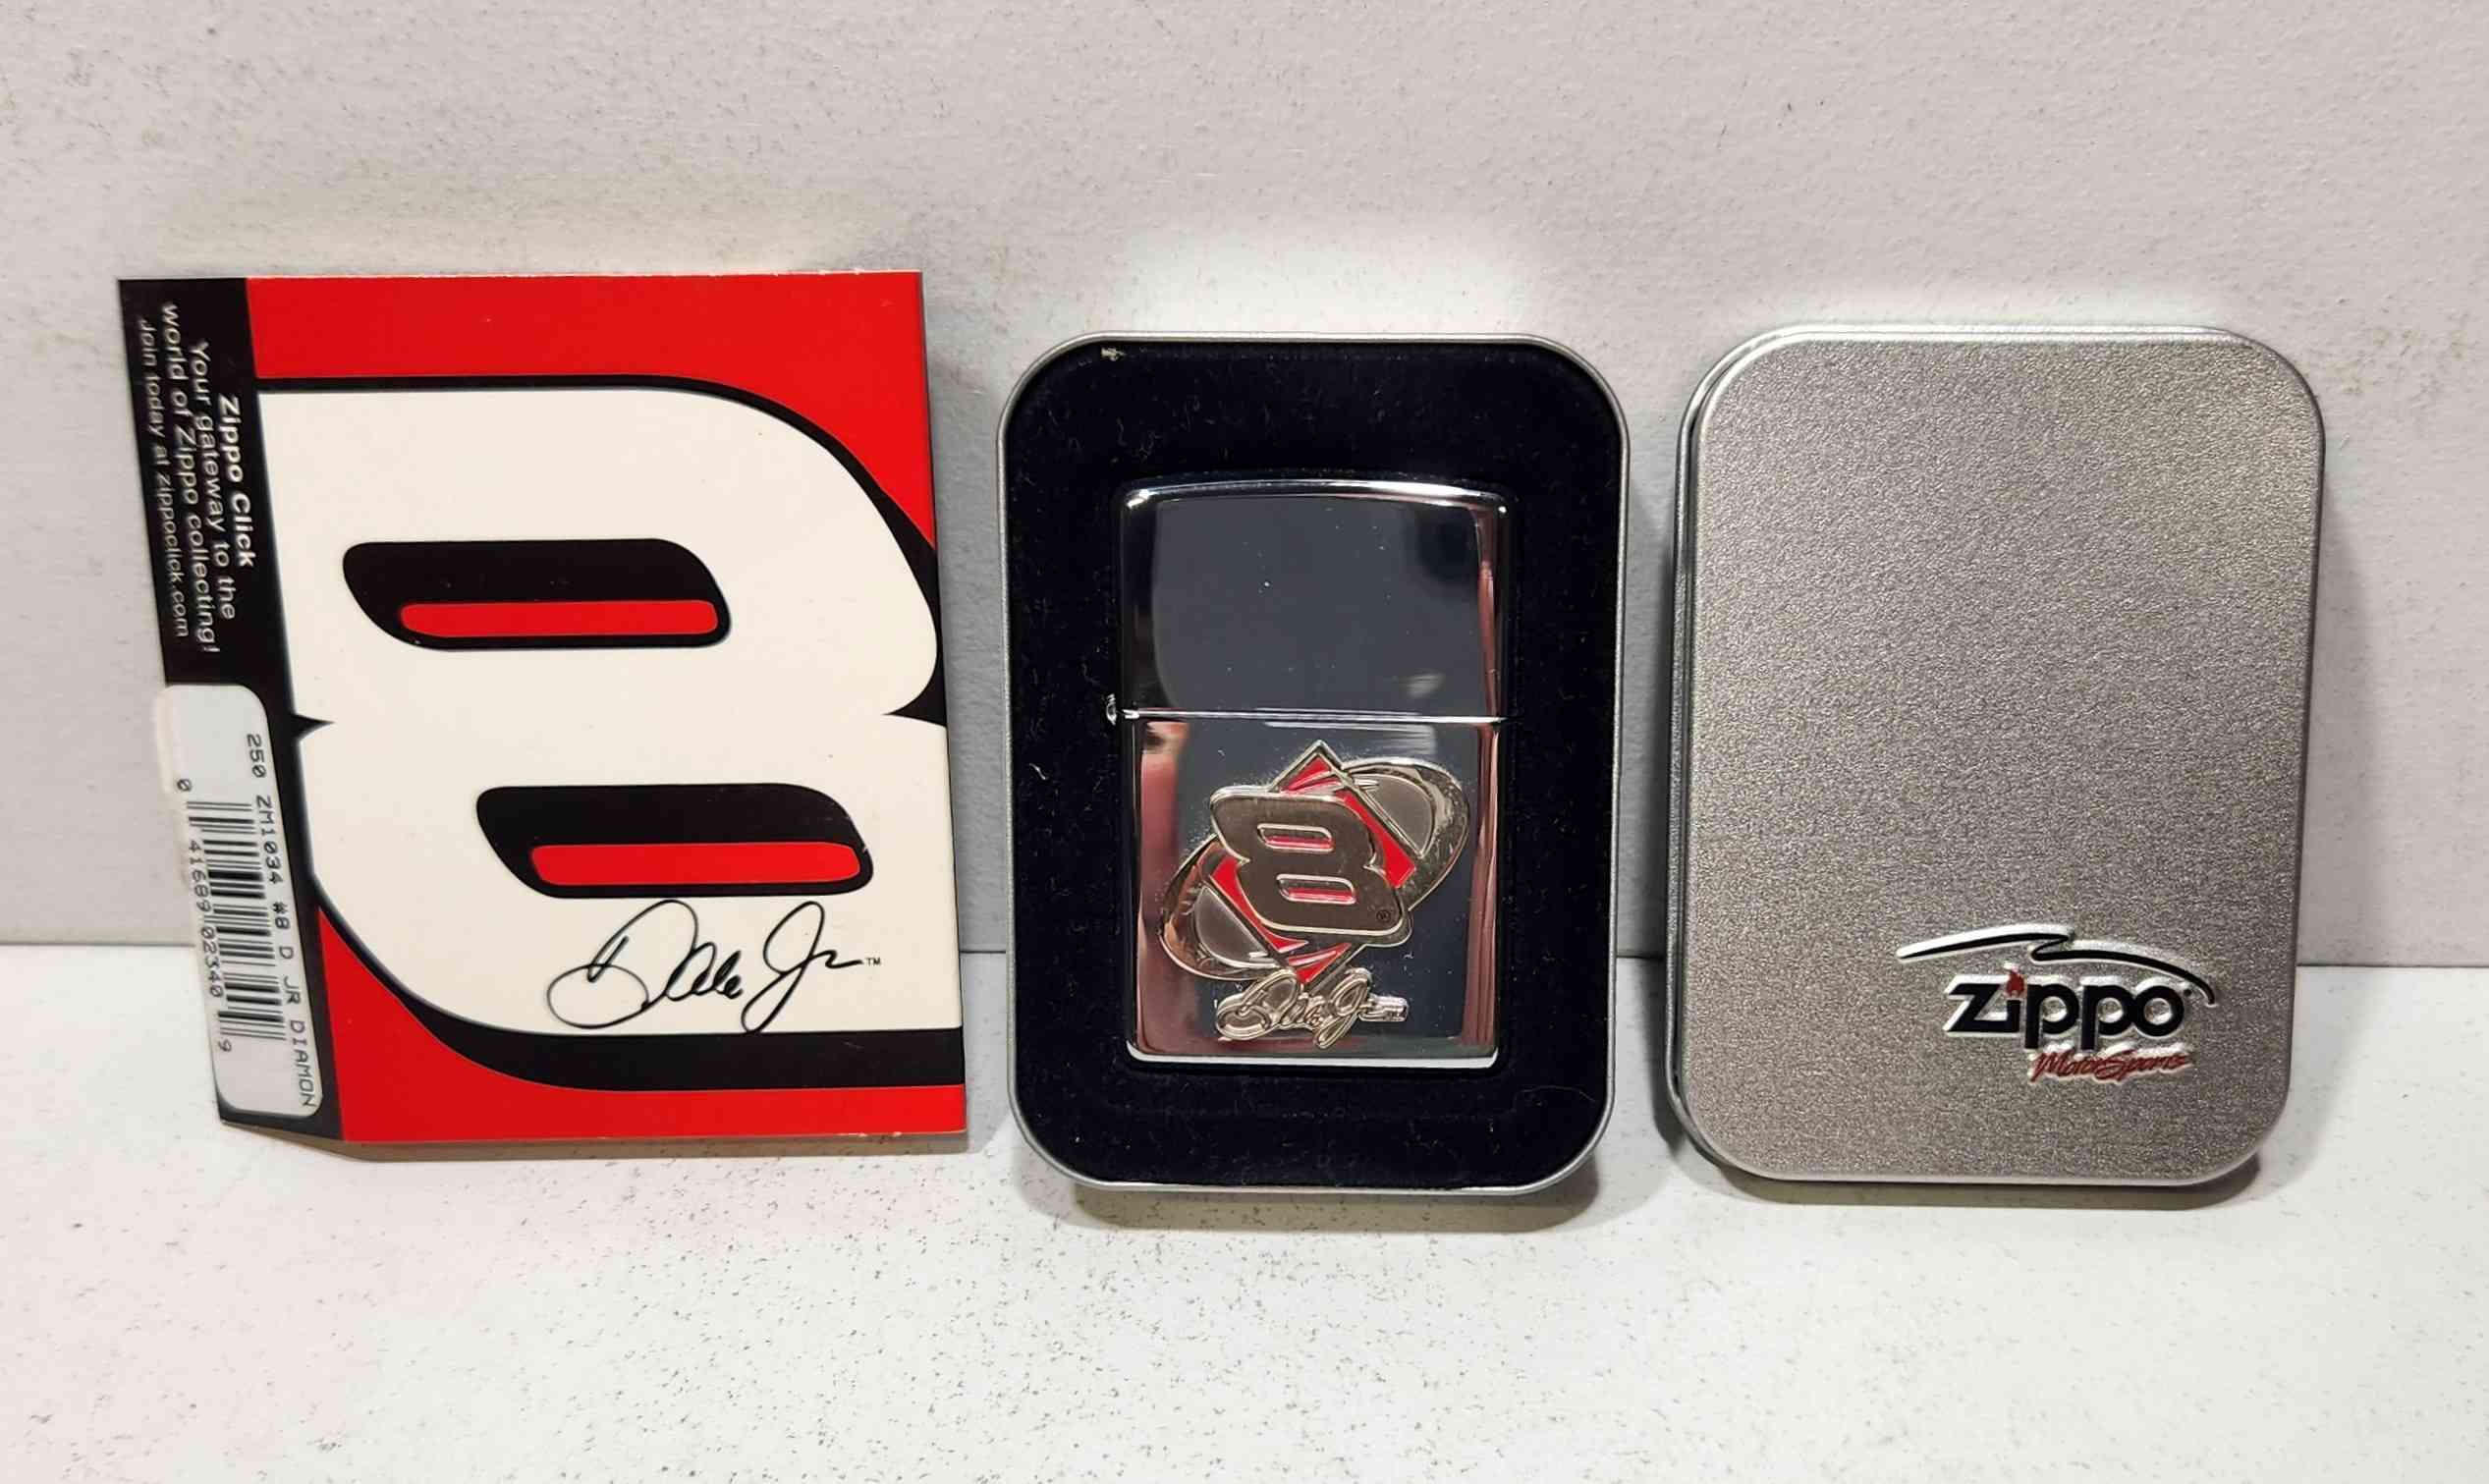 2005 Dale Earnhardt Jr "Diamond Emblem" Zippo lighter